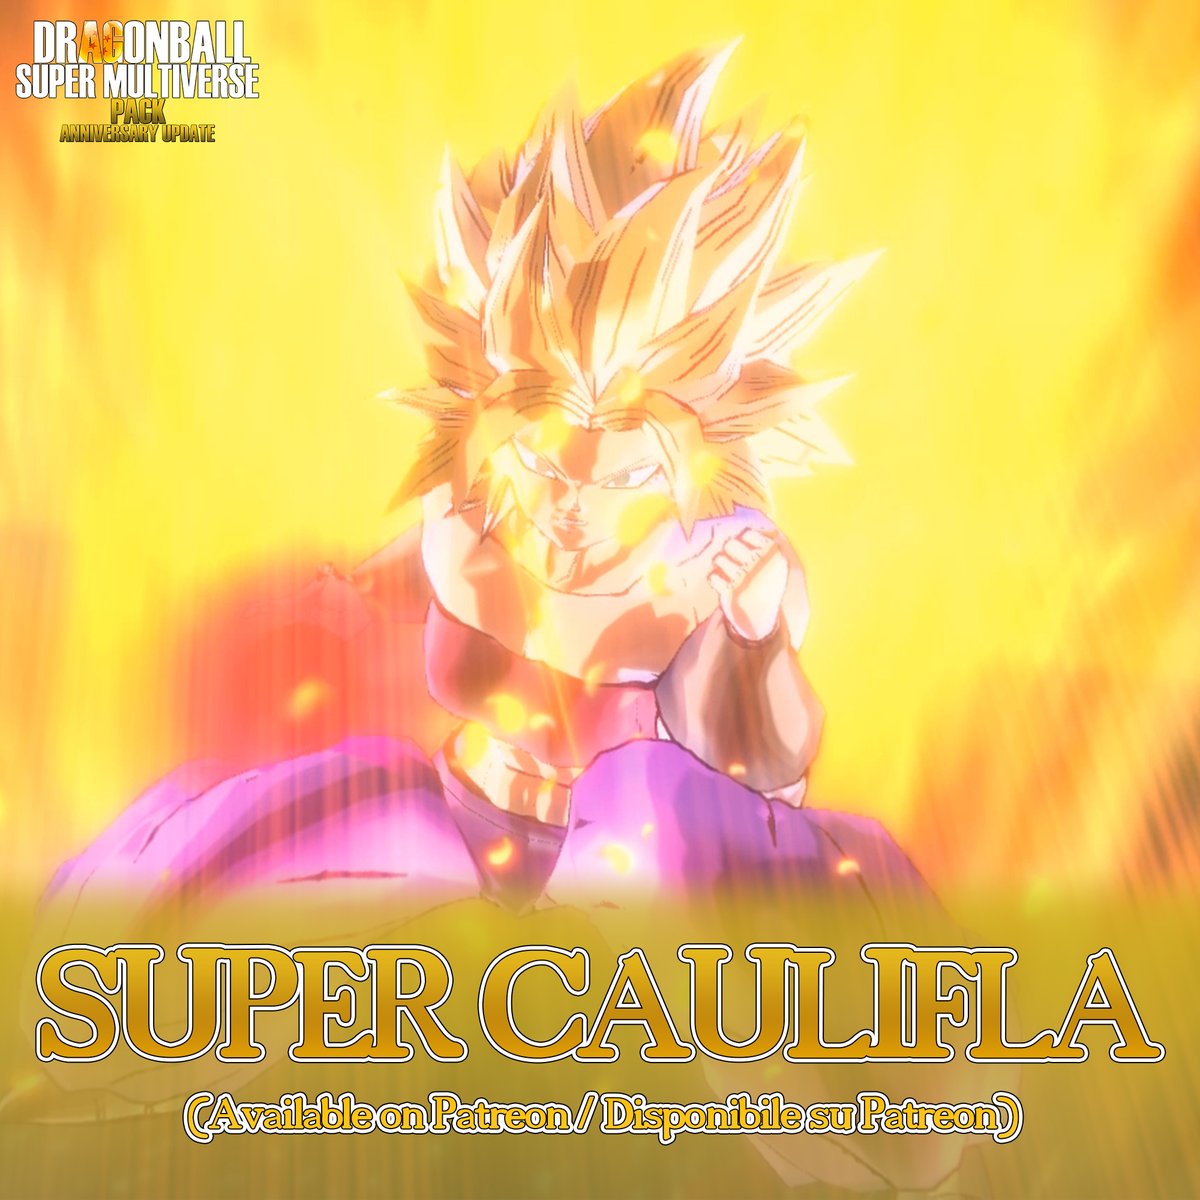 x1 Dragon Ball Super Bold Super Saiyan 2 Caulifla Event Pack 2 Promo TB1-012 